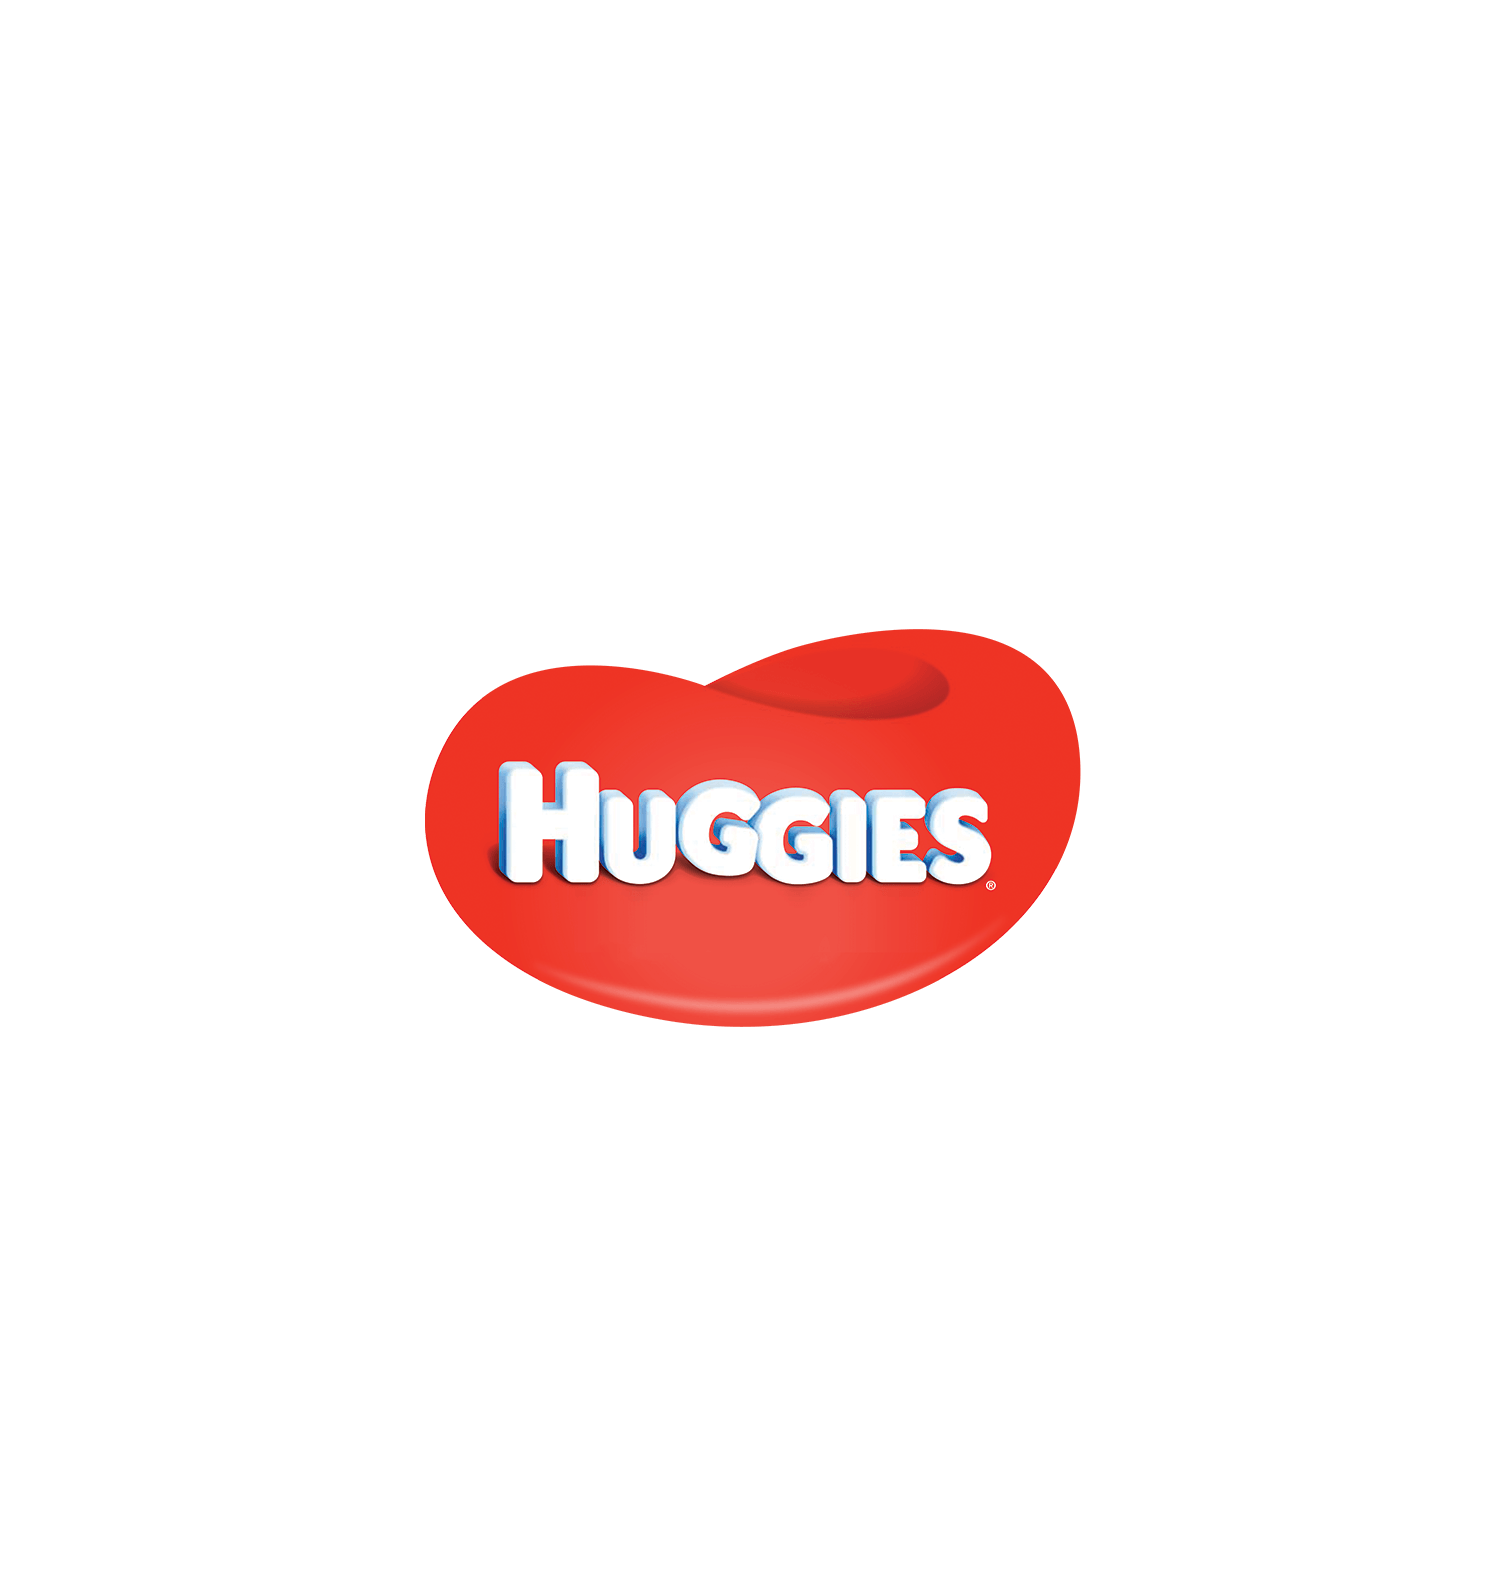 Huggies Logo - logo huggies png. Clipart & Vectors for free 2019